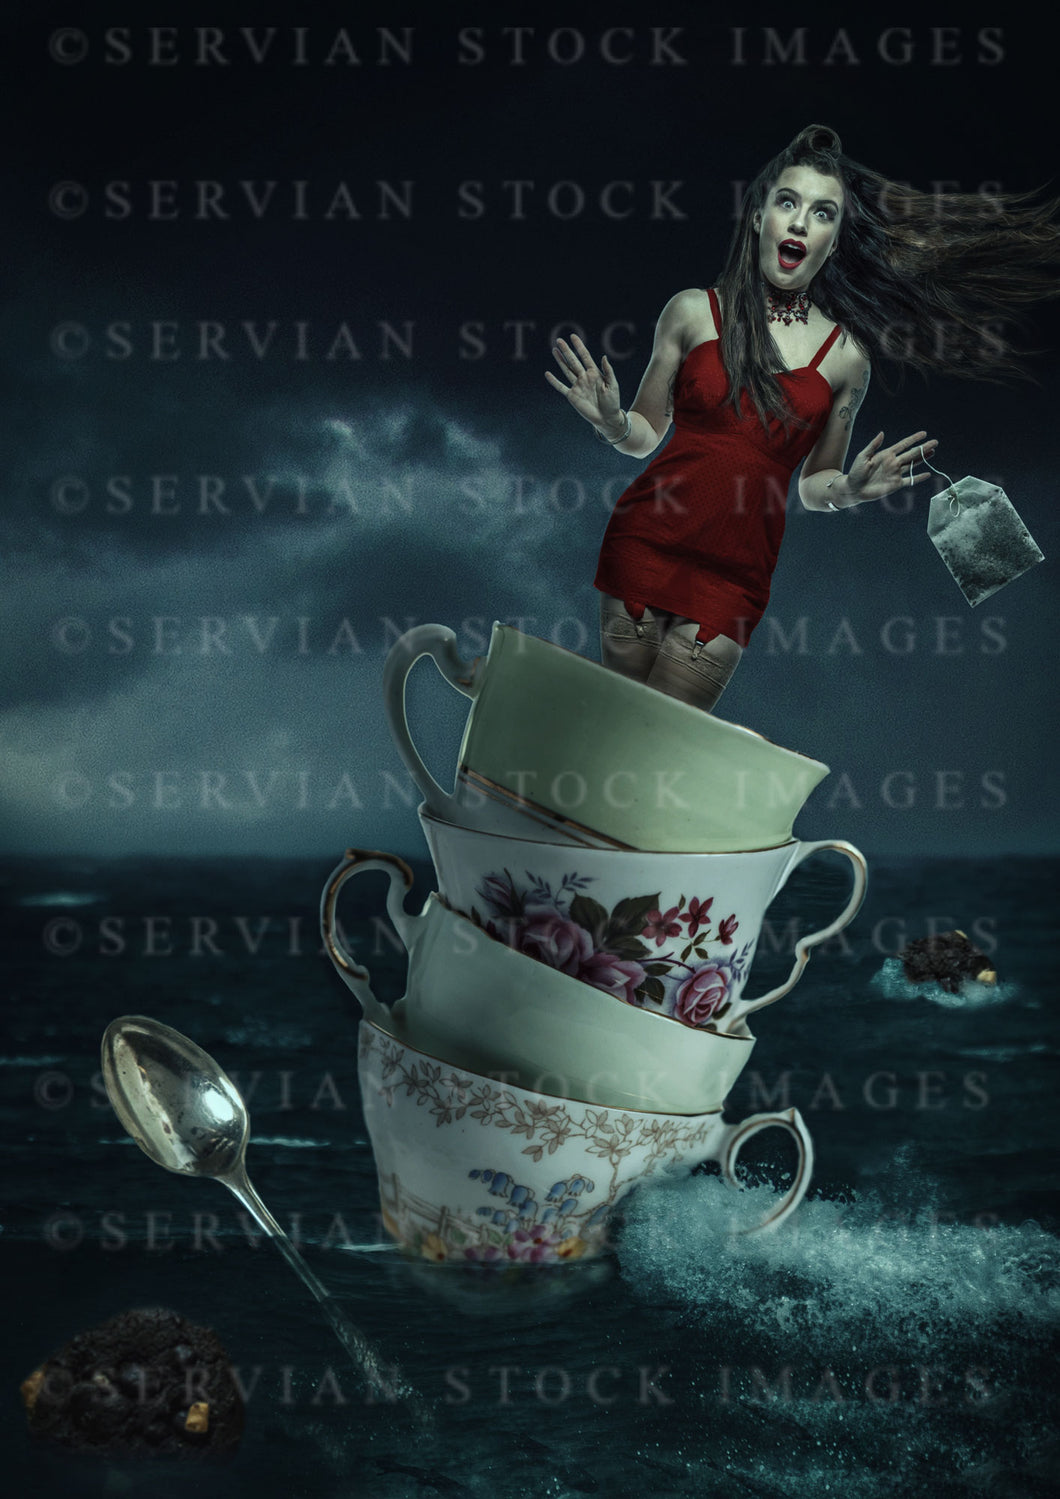 Fine Art Image - A Storm in a Teacup